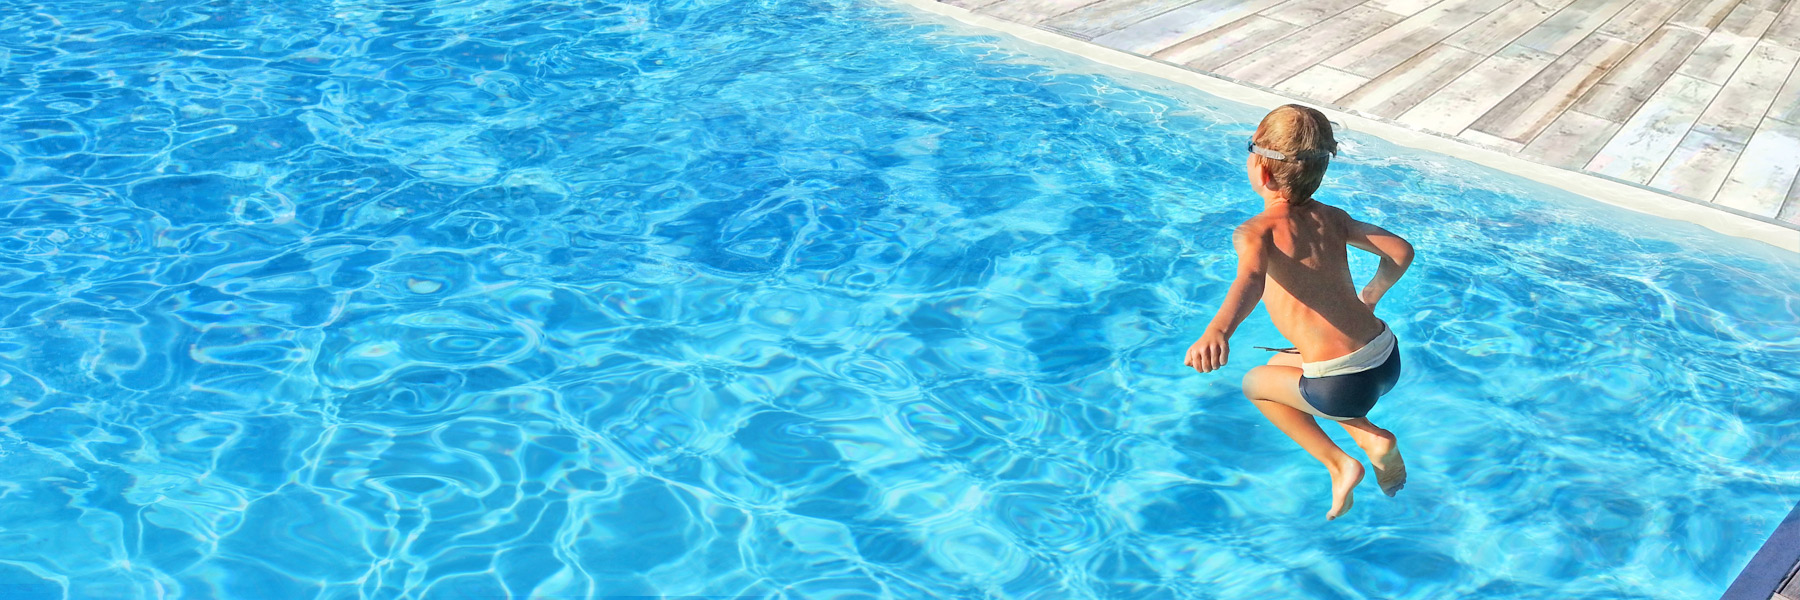 The swimming pools of Laure : Les piscines de Laure, Sainte-Maxime, pool maintenance